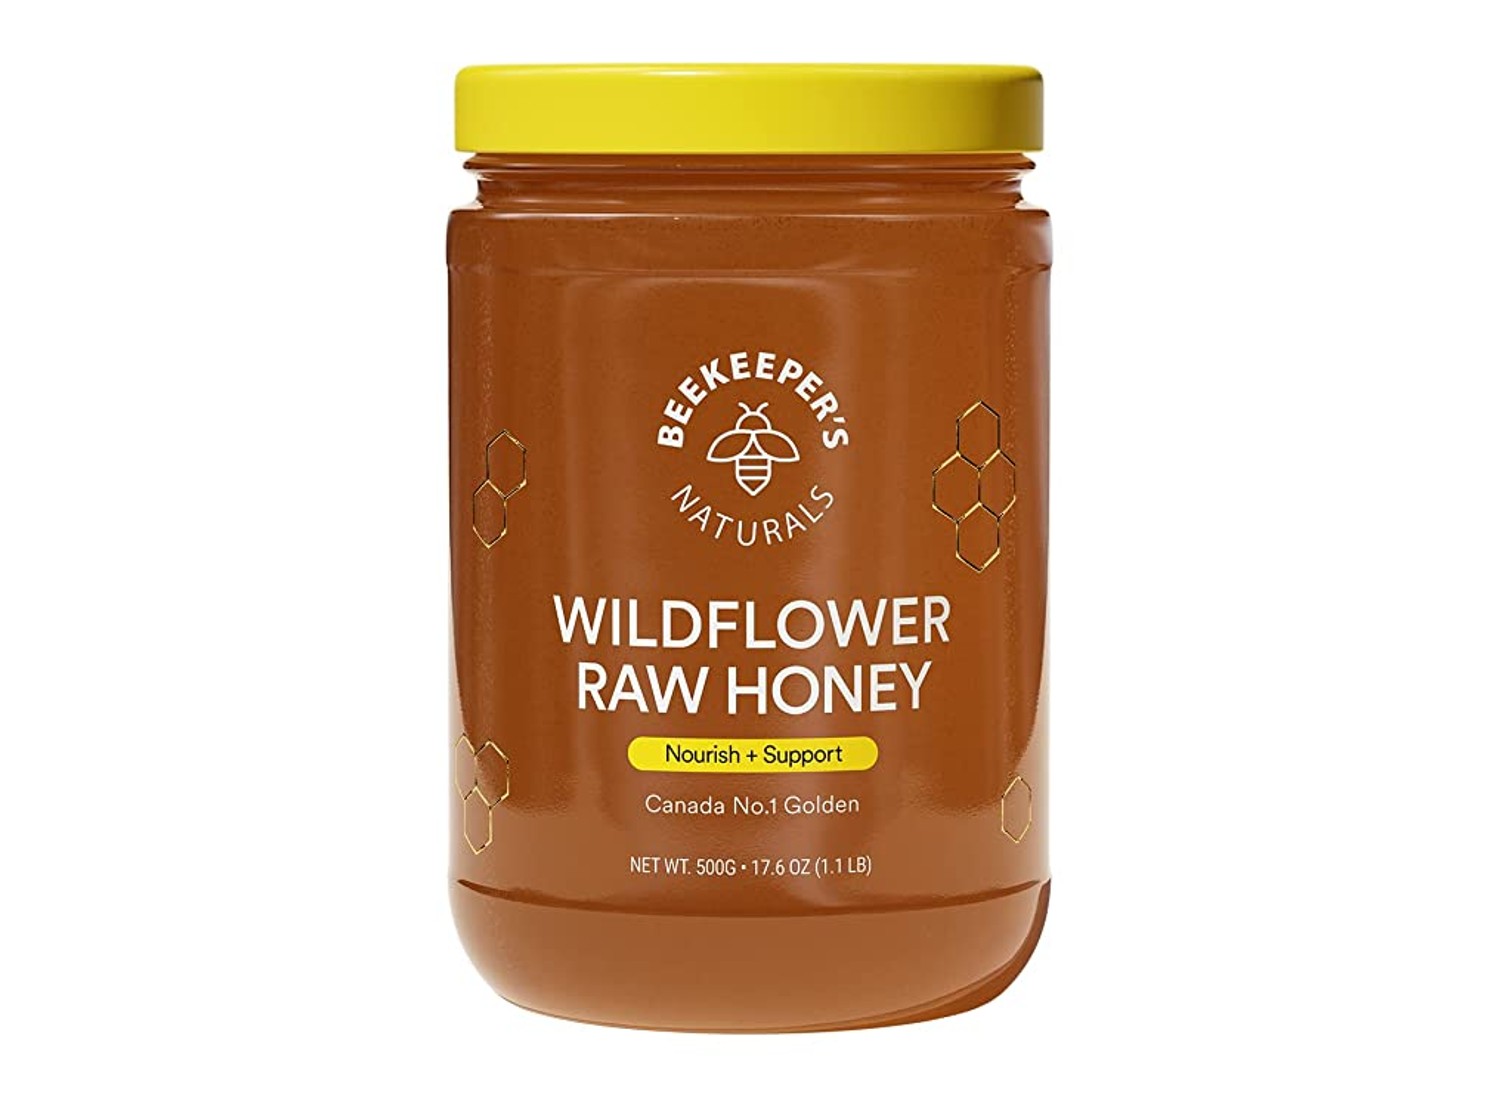 Beekeeper's Natural Wildflower Raw Honey